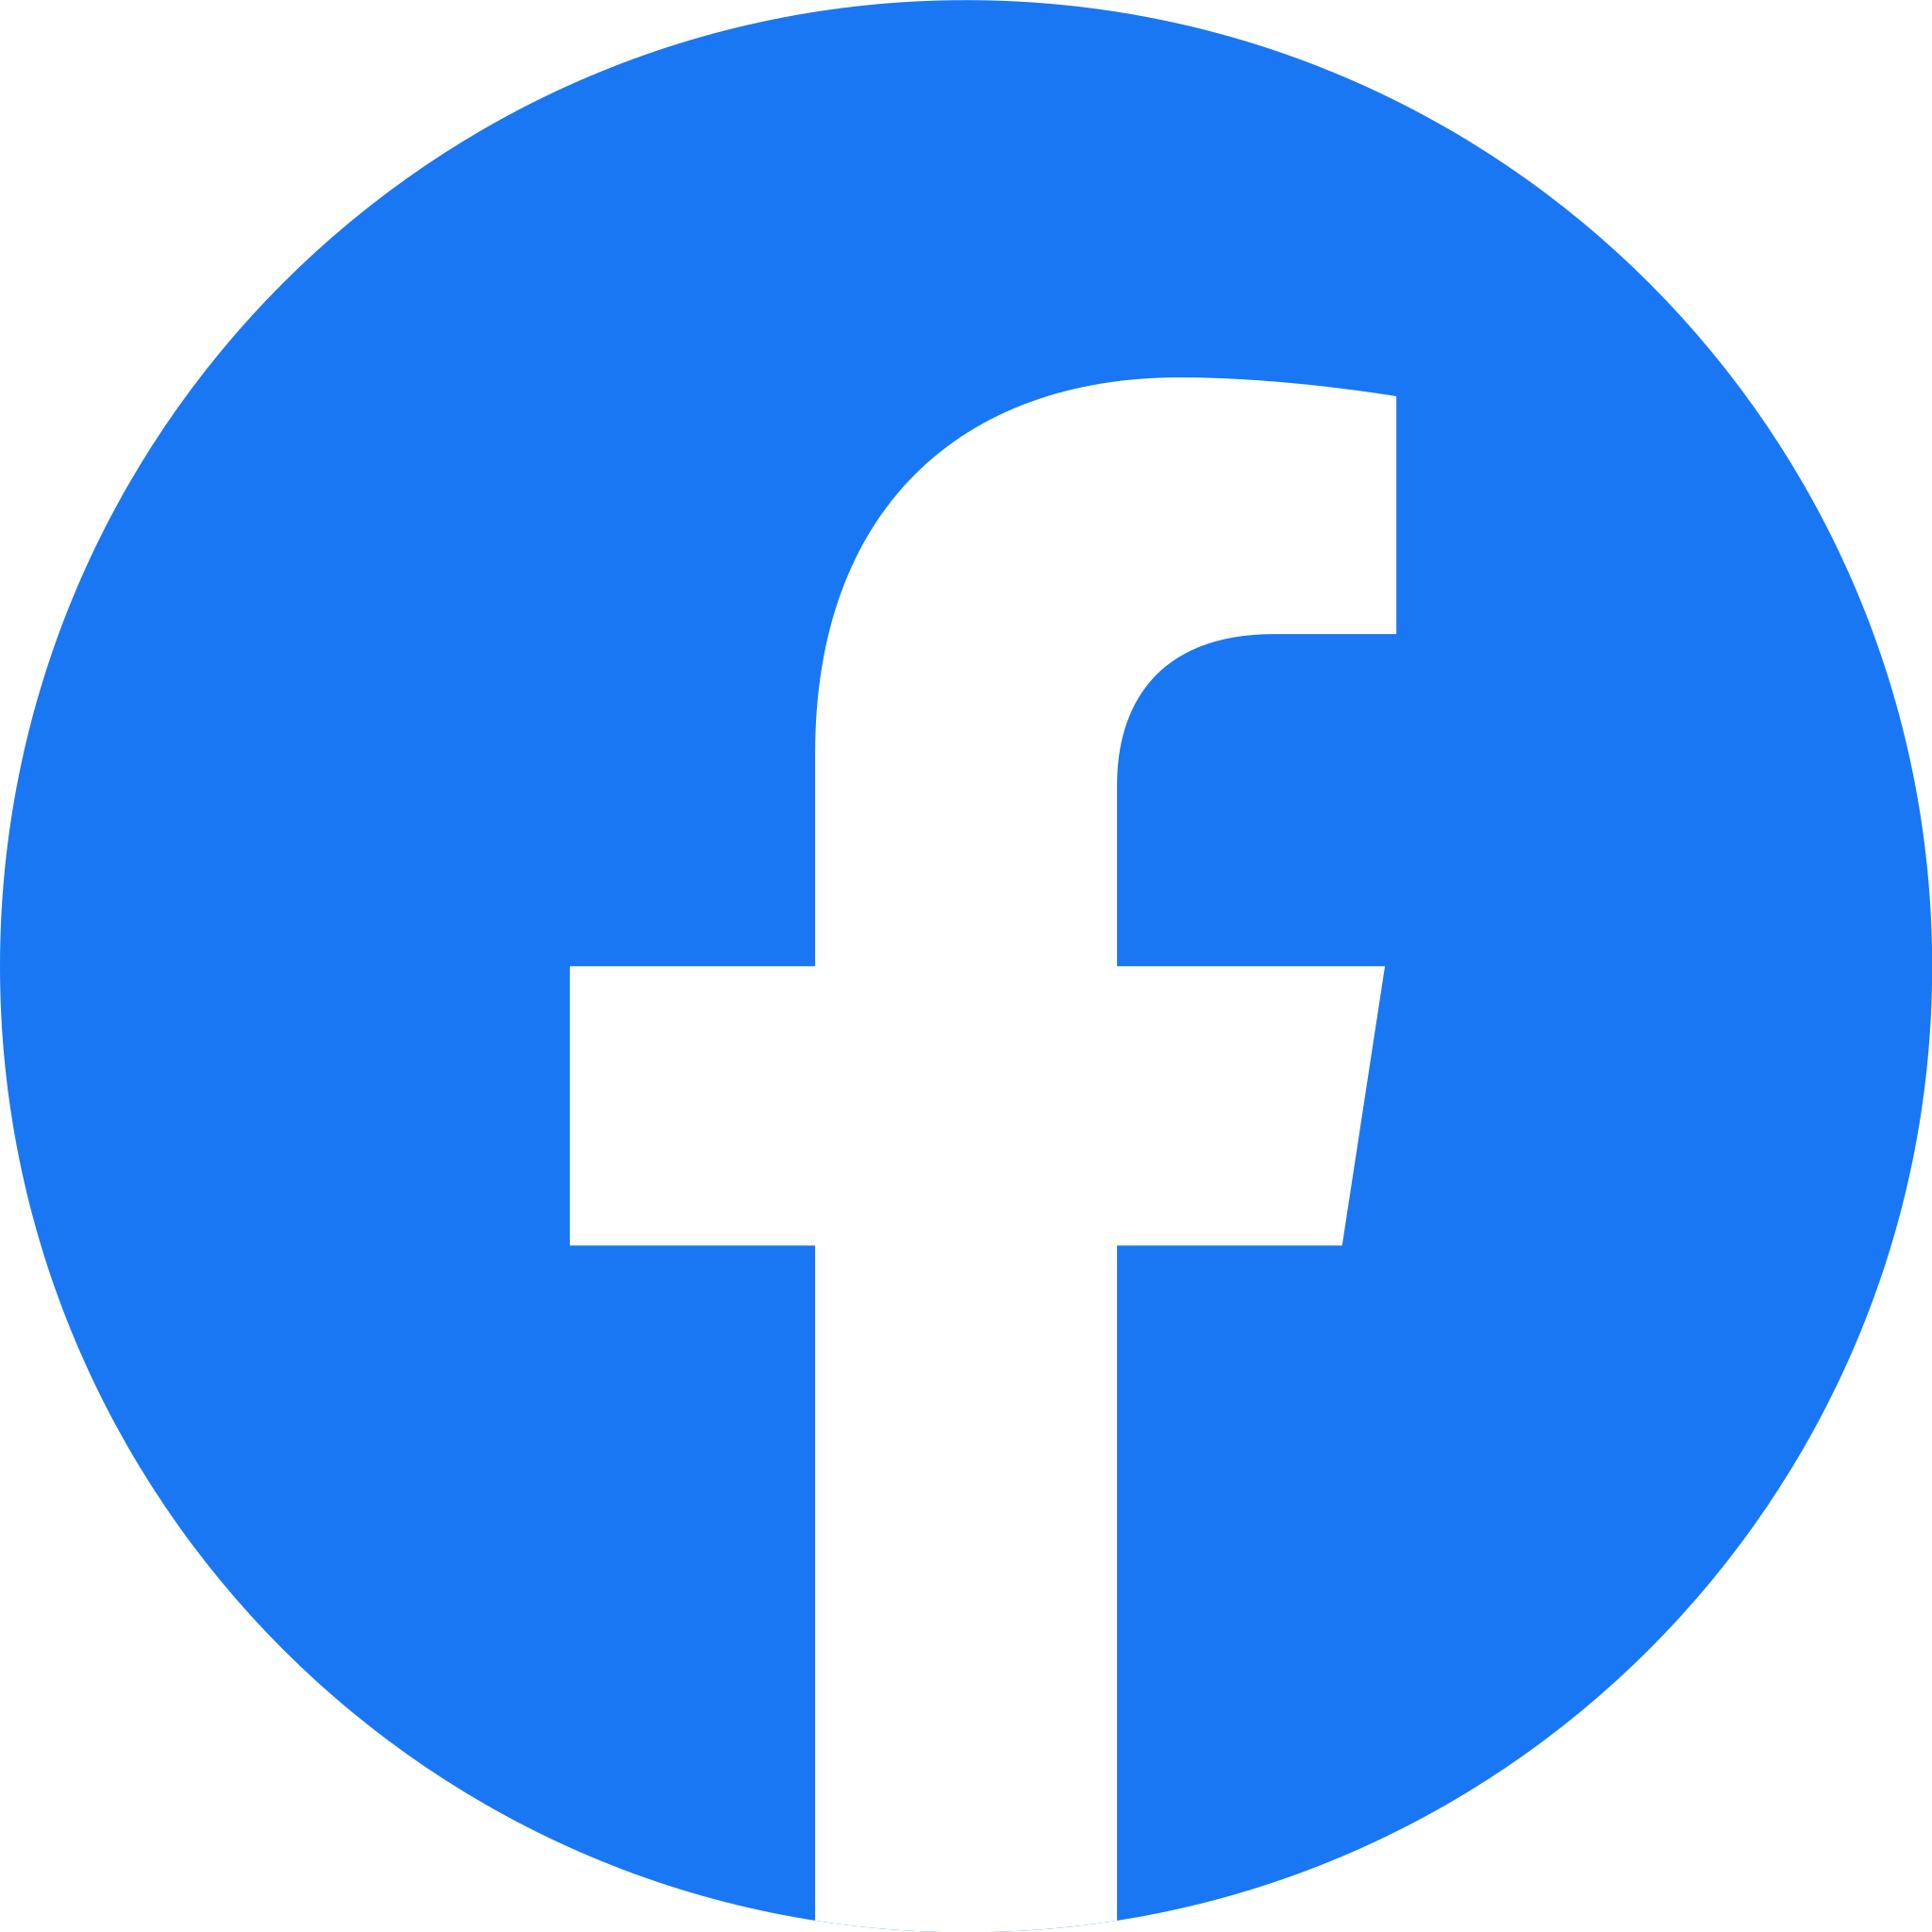 Facebook f logo 2019.svg